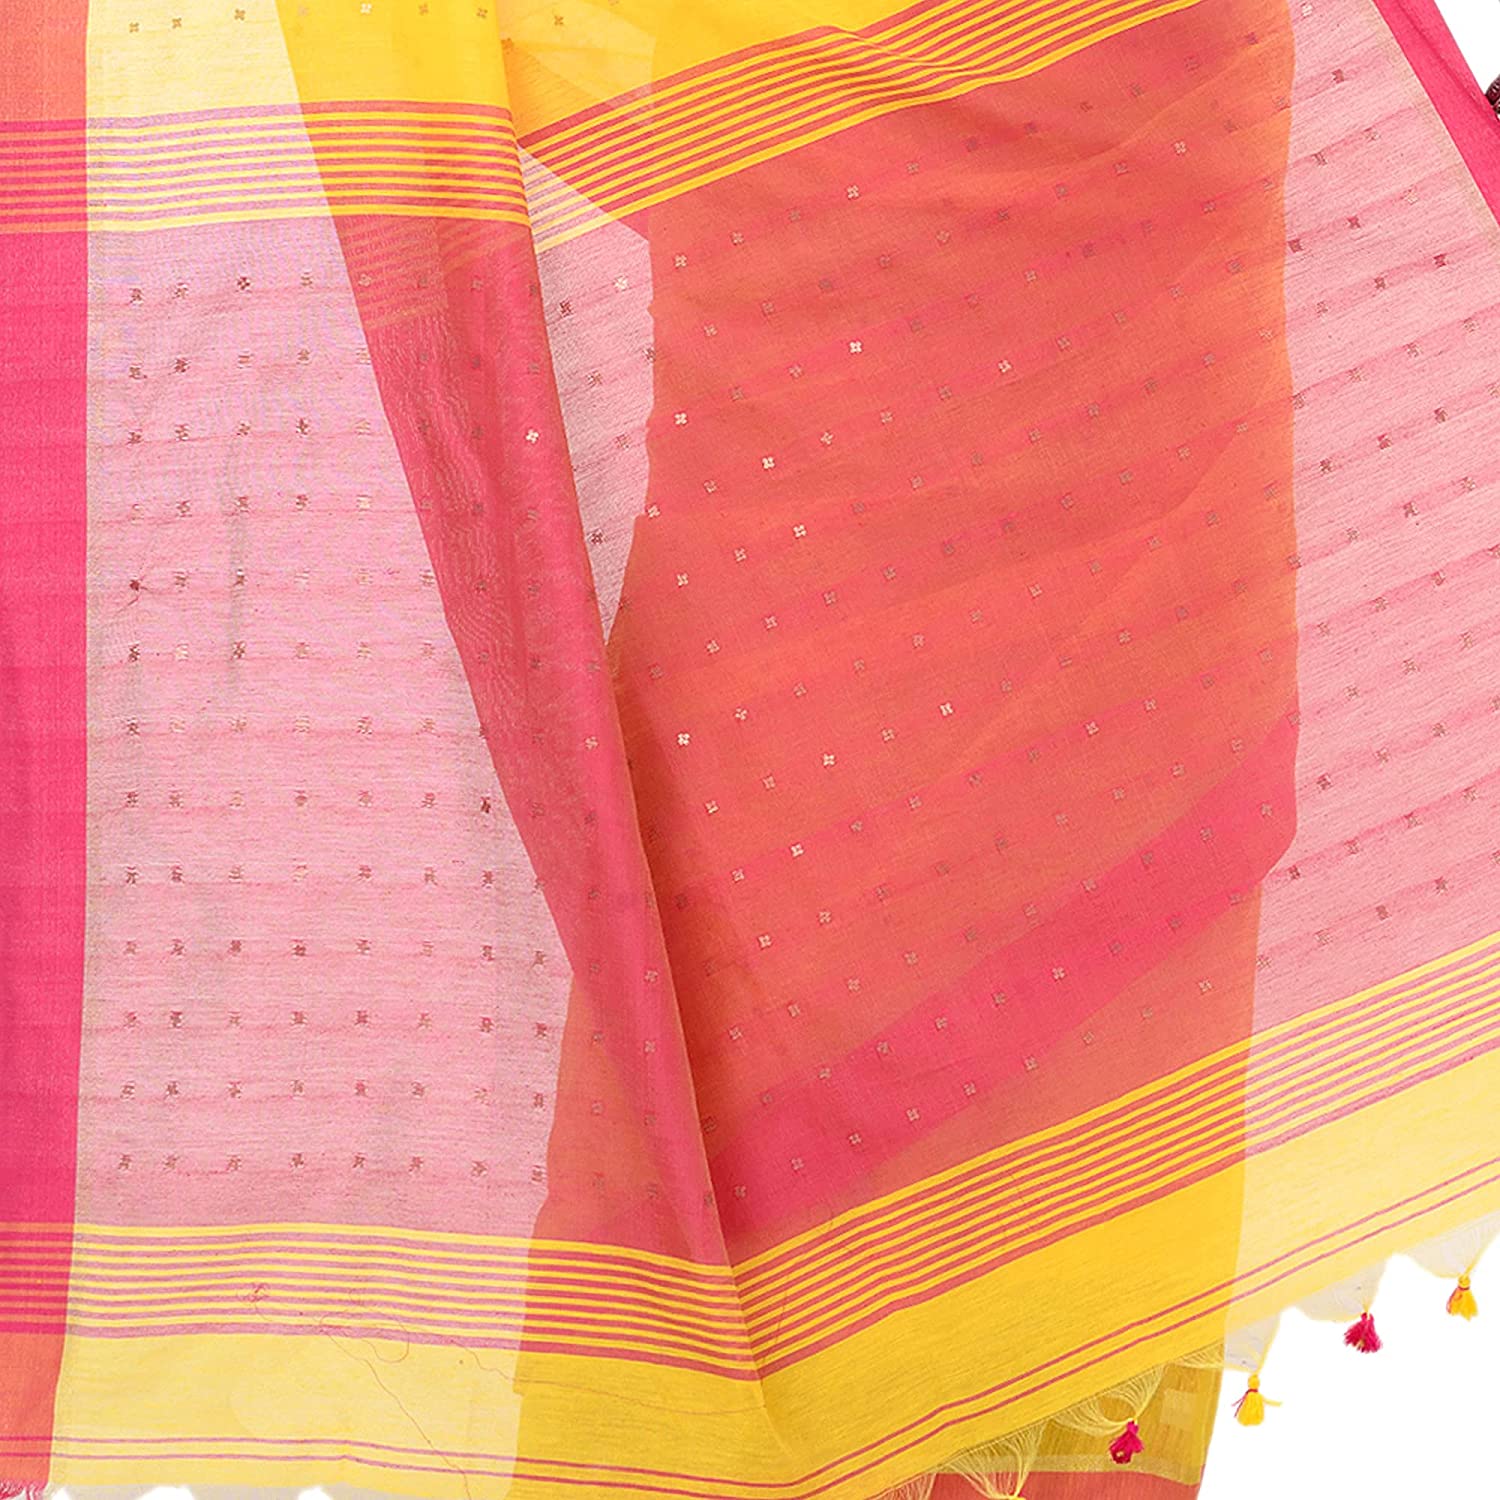 Women's Tant Silk Handloom Yellow Cotton Saree Sequence Work - Piyari Fashion